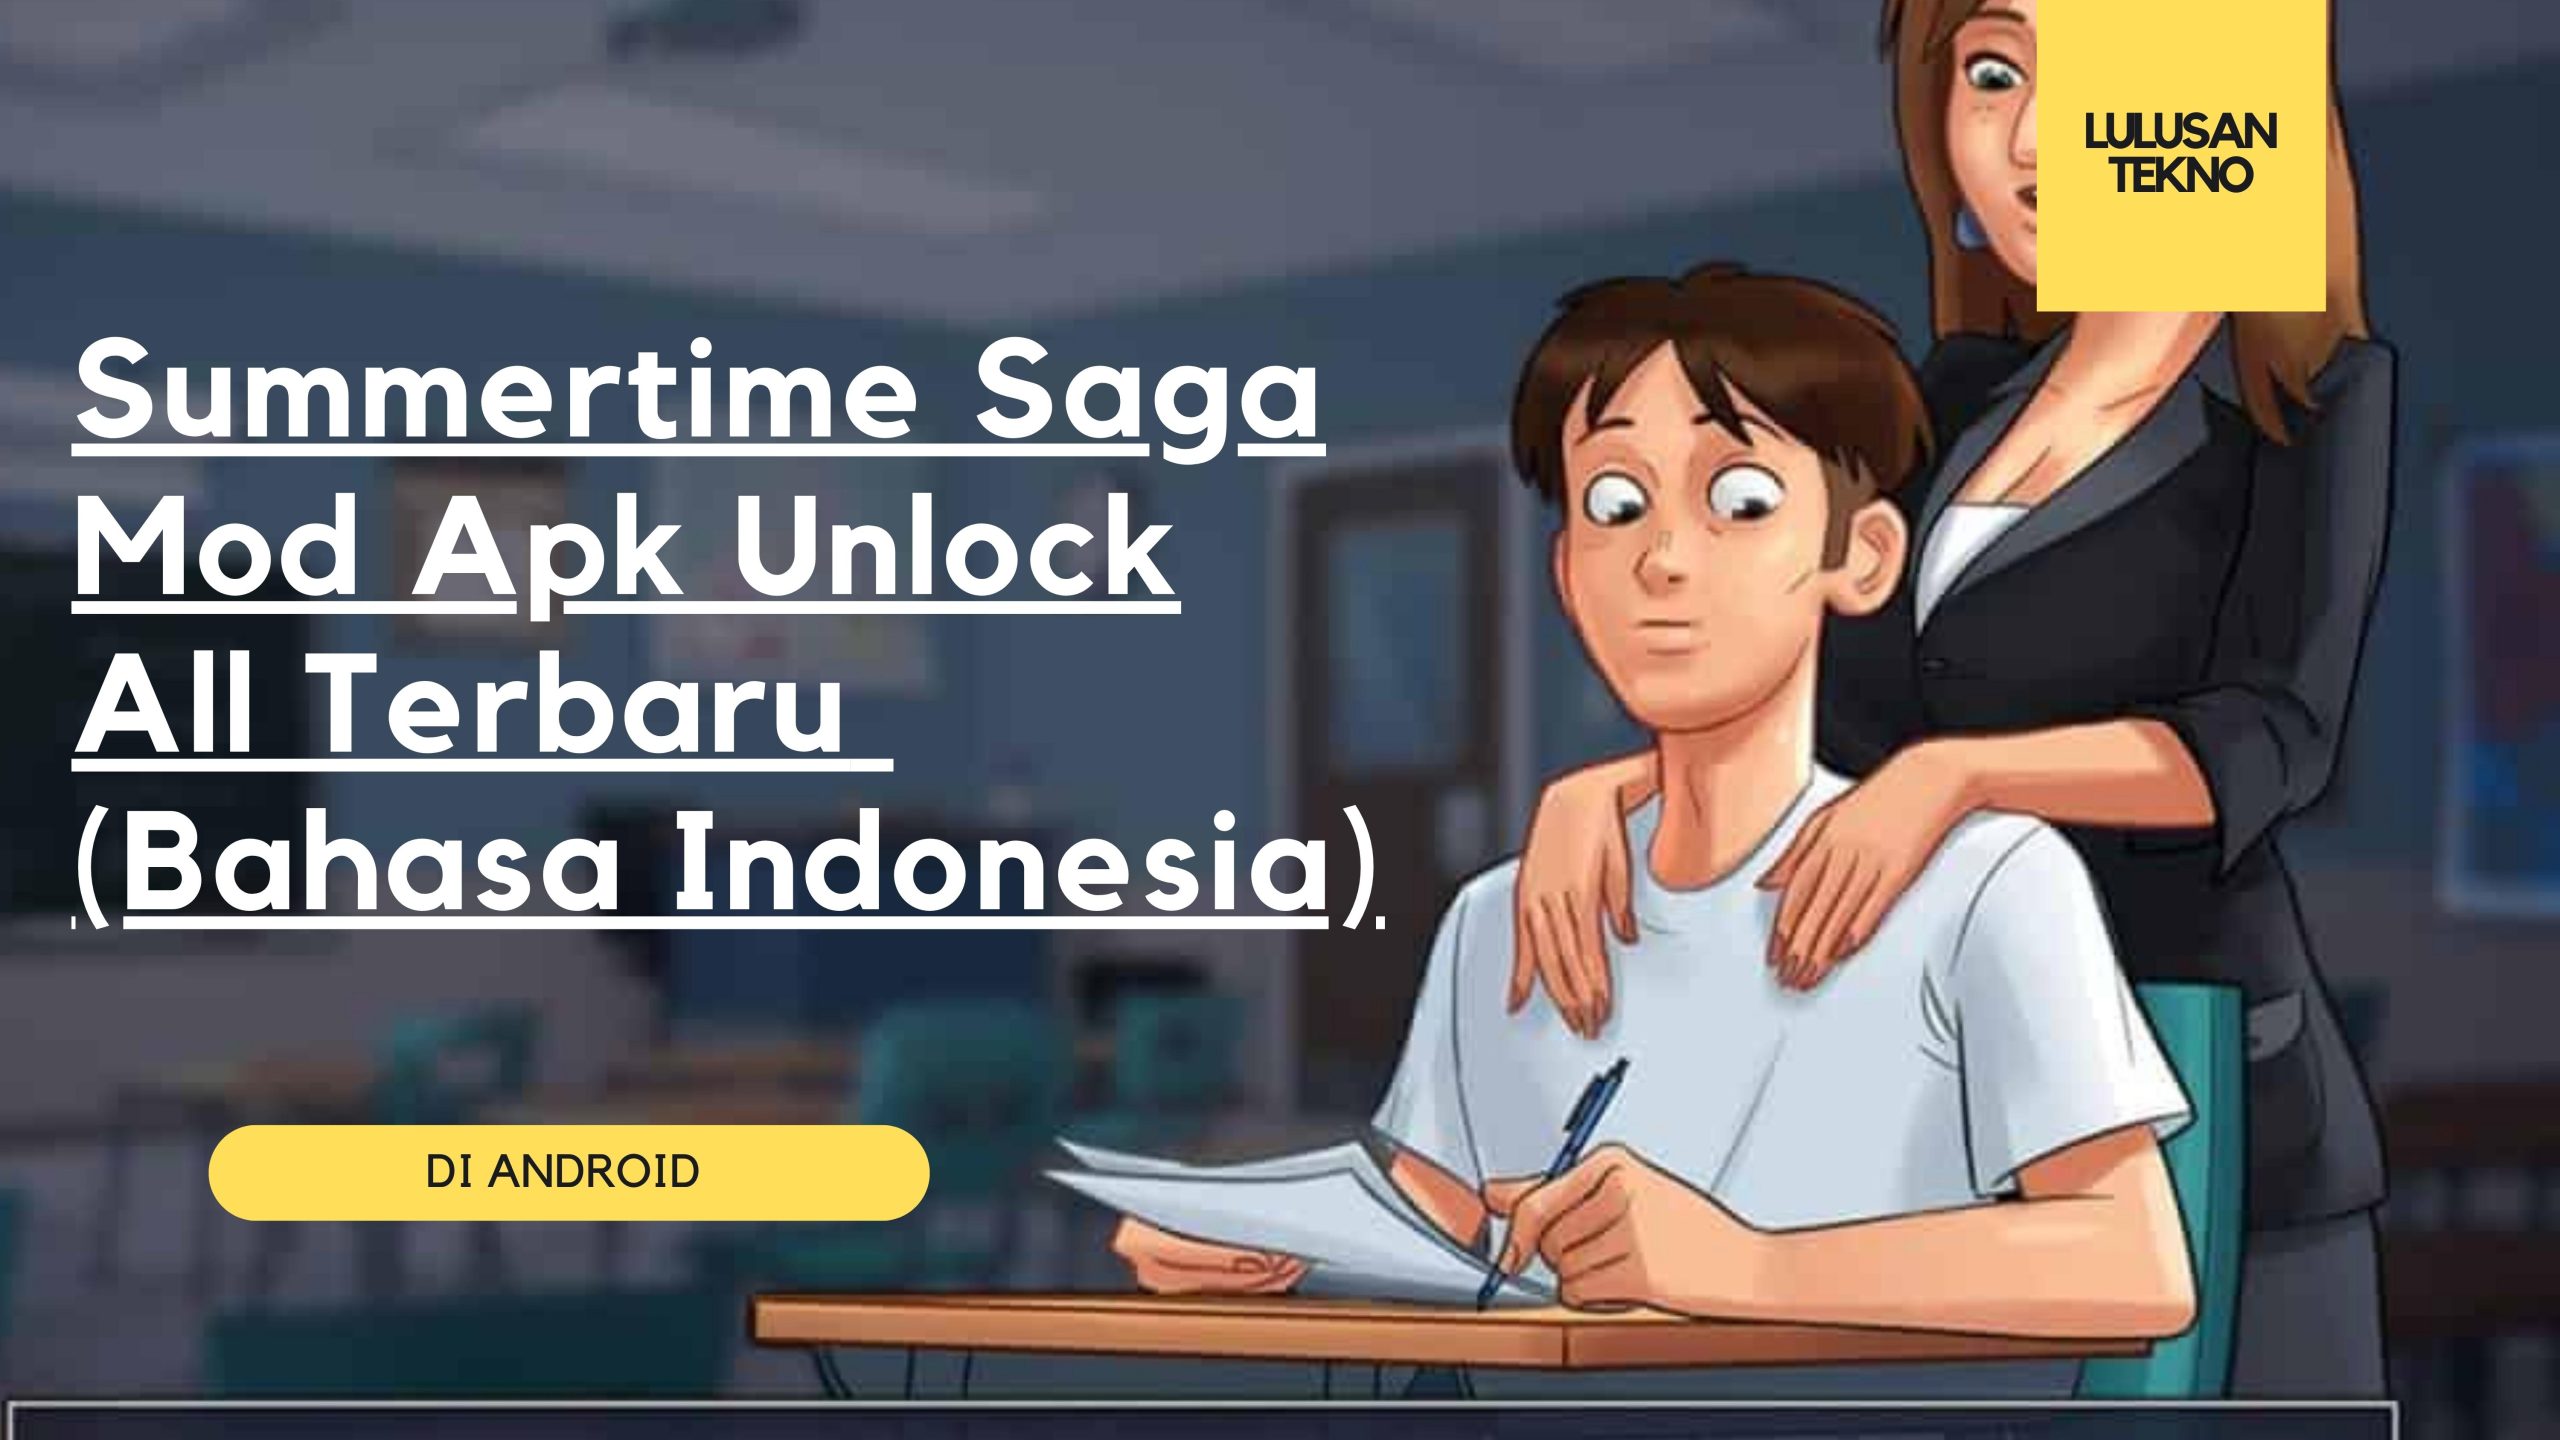 Summertime Saga Mod Apk Unlock All Terbaru (Bahasa Indonesia)